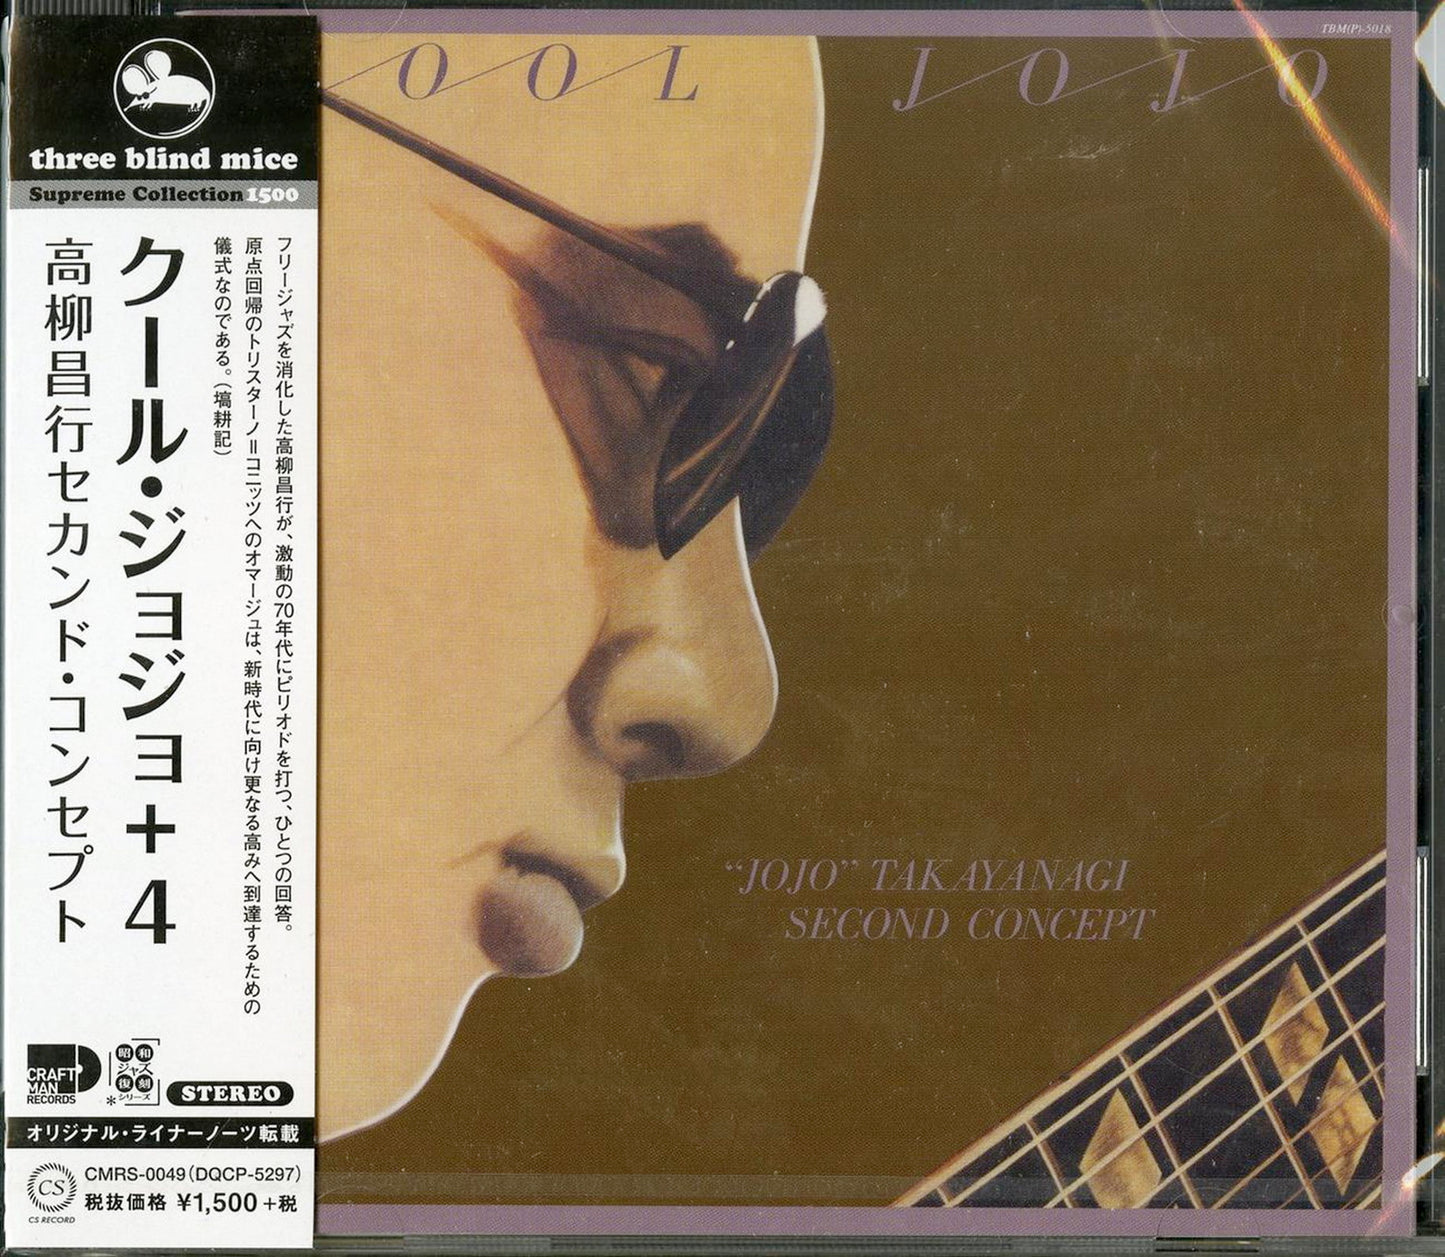 Masayuki Takayanagi - Cool Jojo +4 - Japan CD